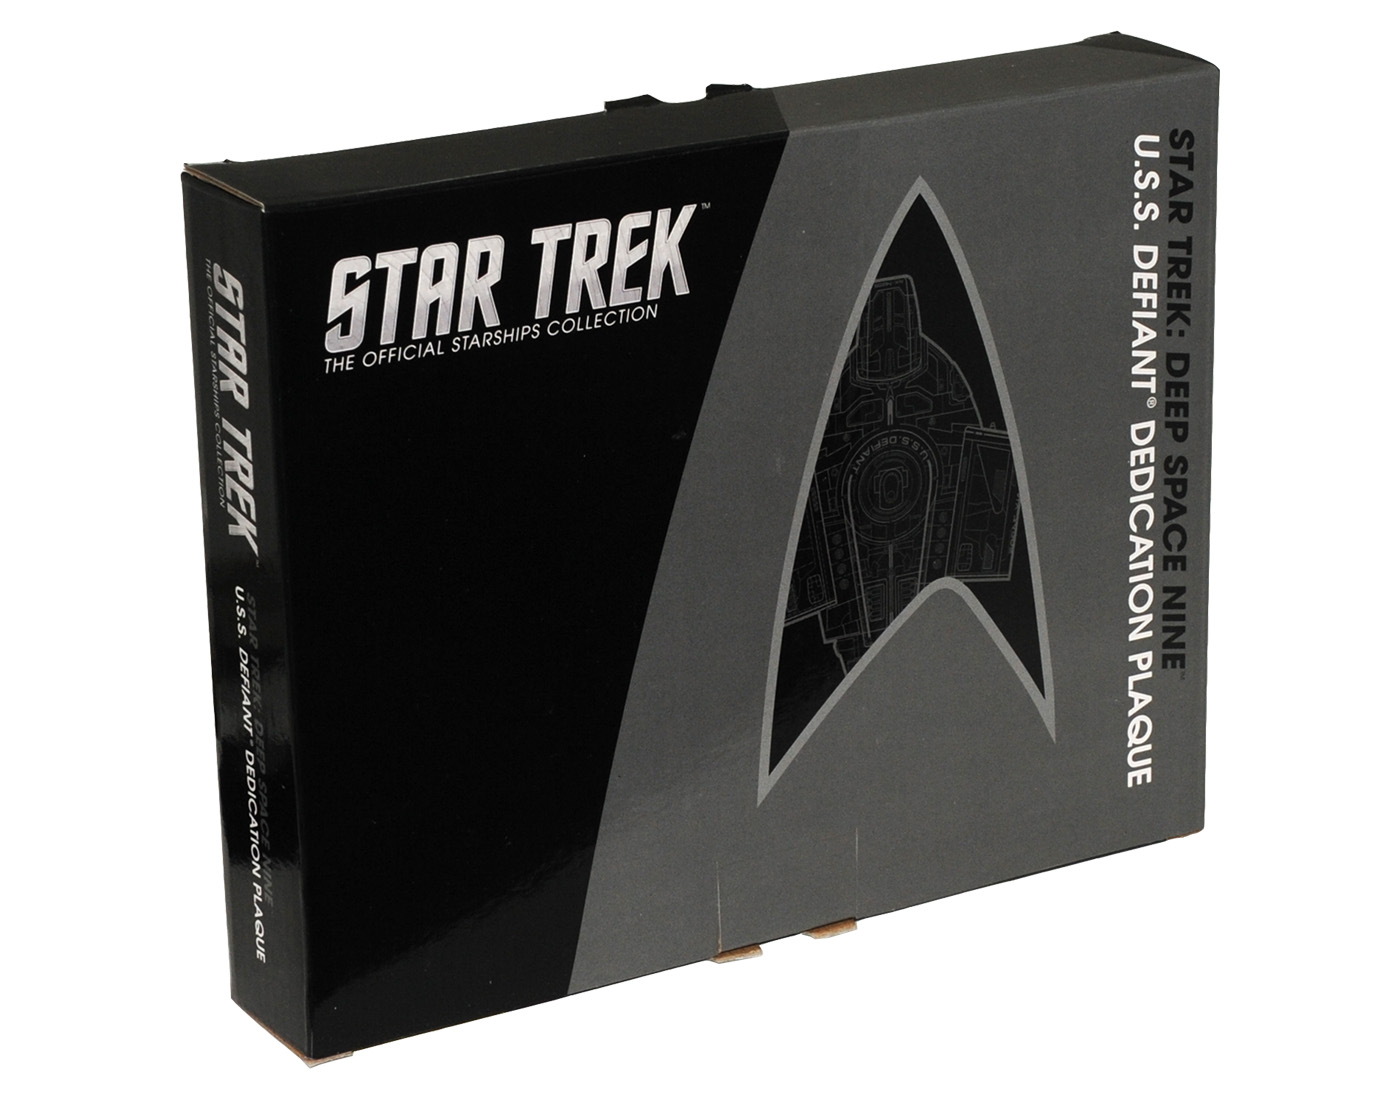 Neu Voyager Schiffs Plakette Star Trek Dedication Plaque Replica Eaglemoss 